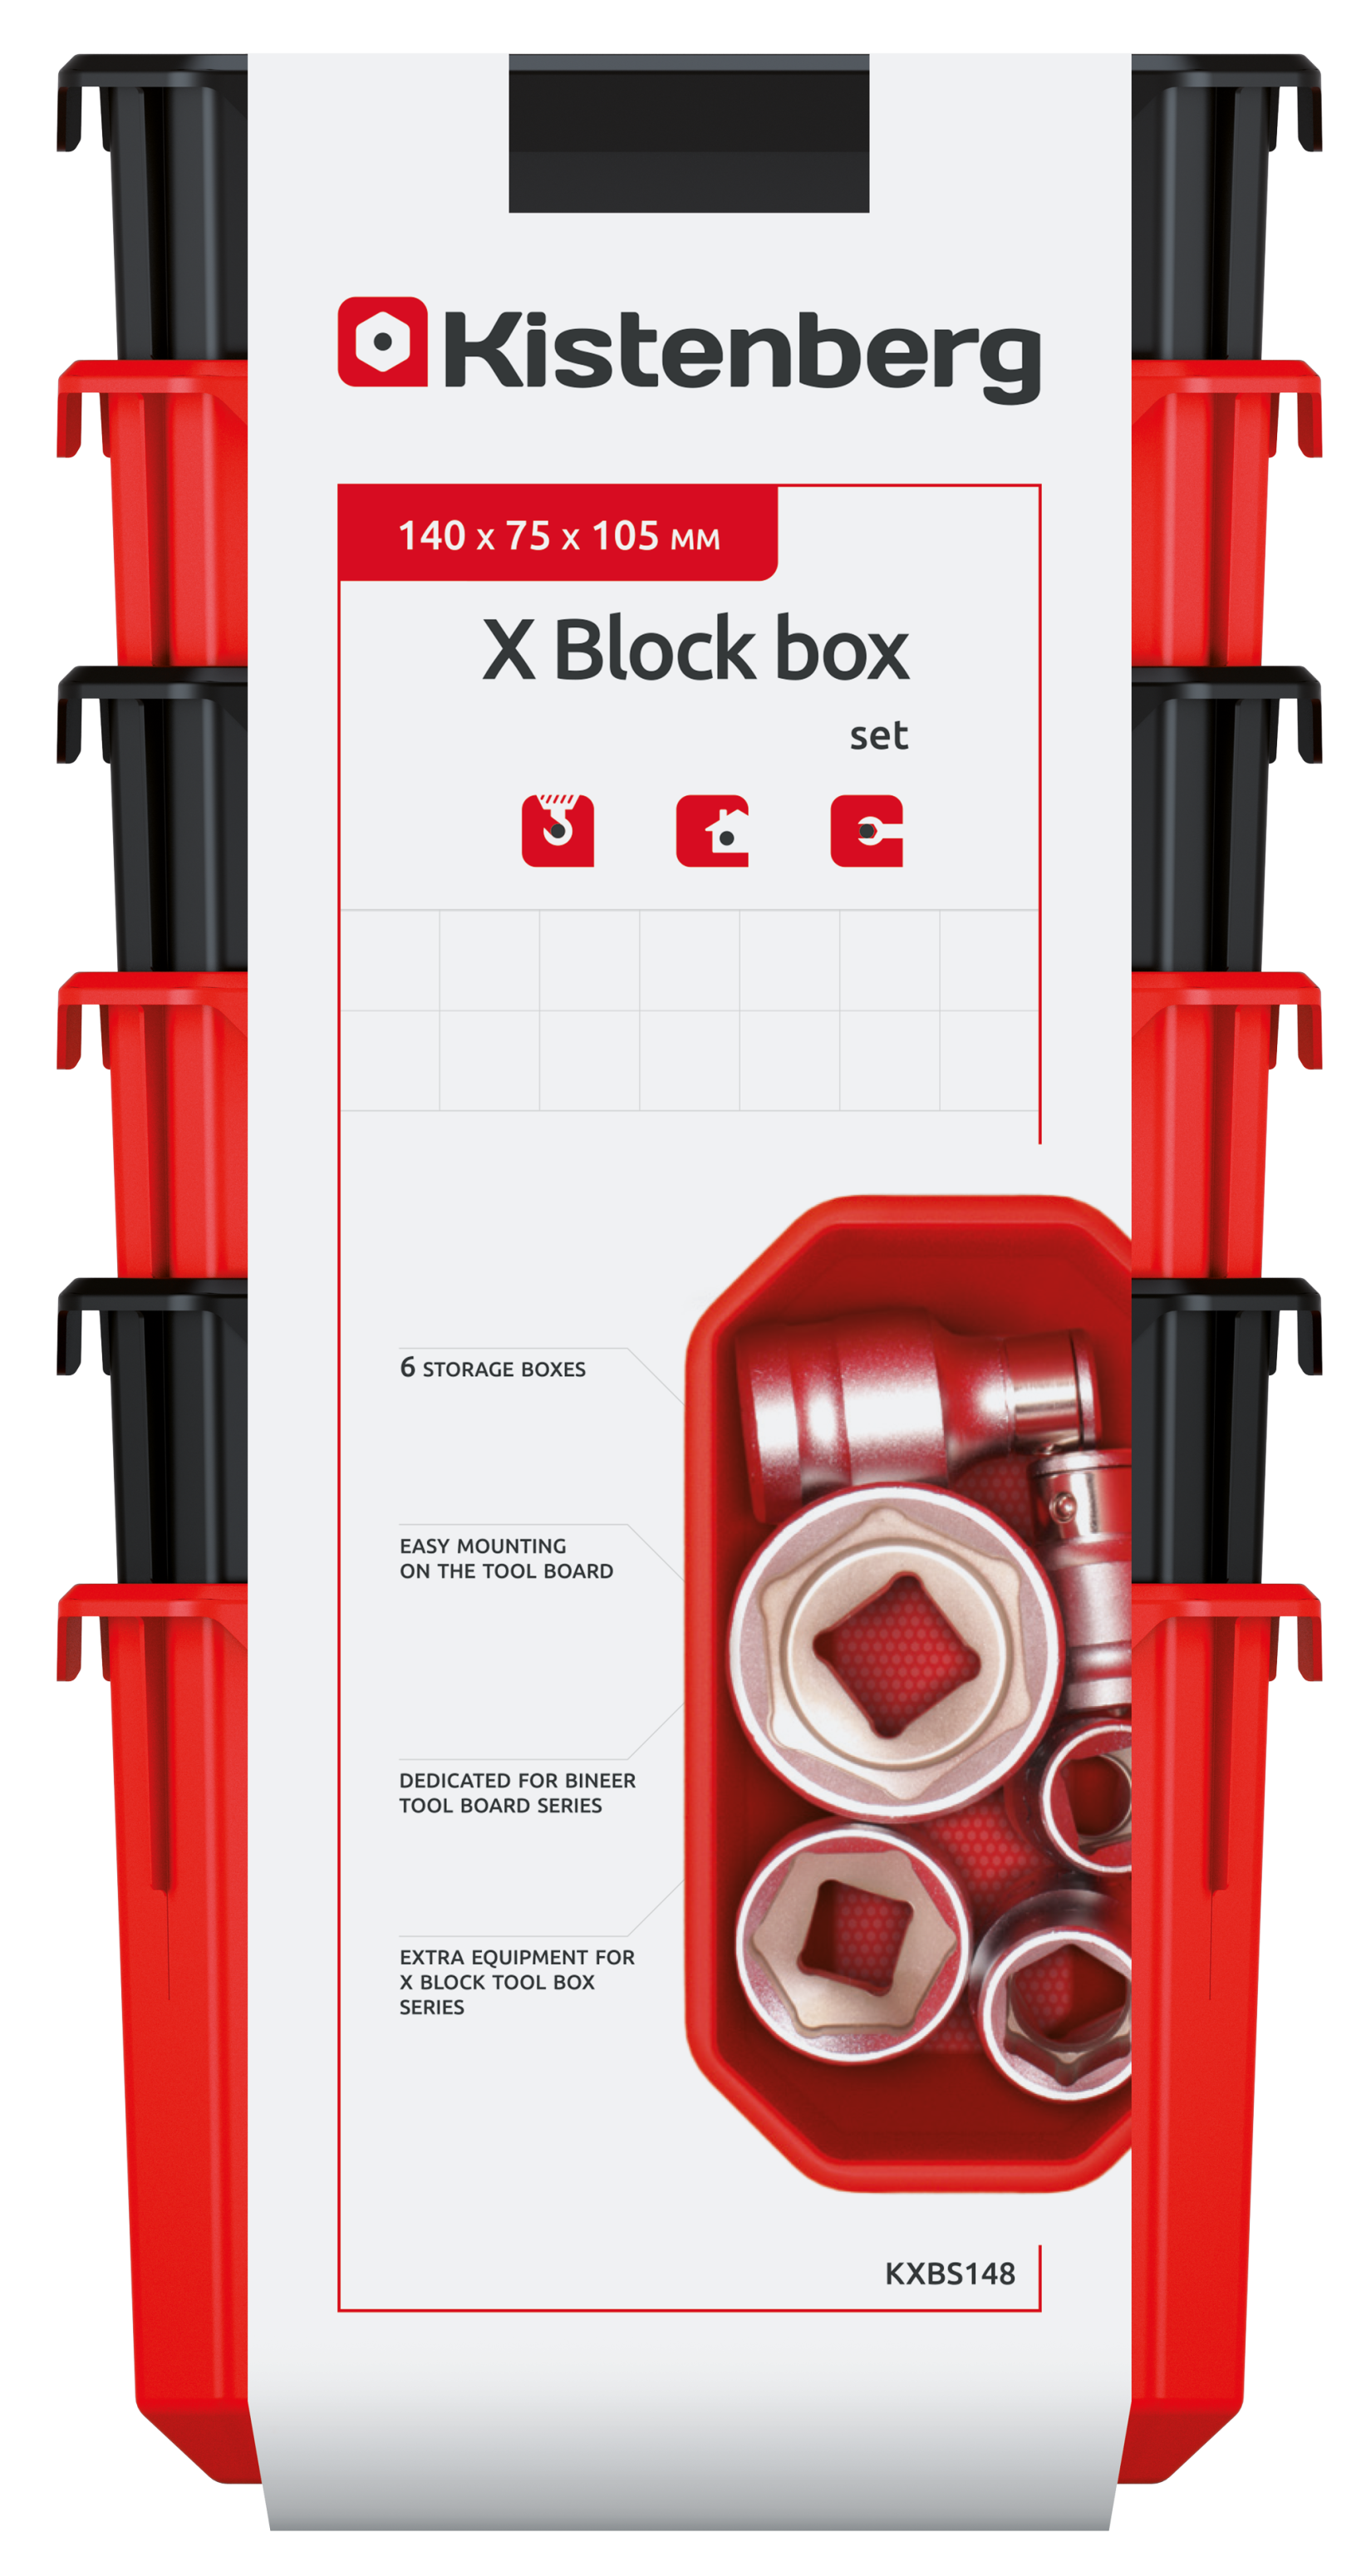 X Block box - set box